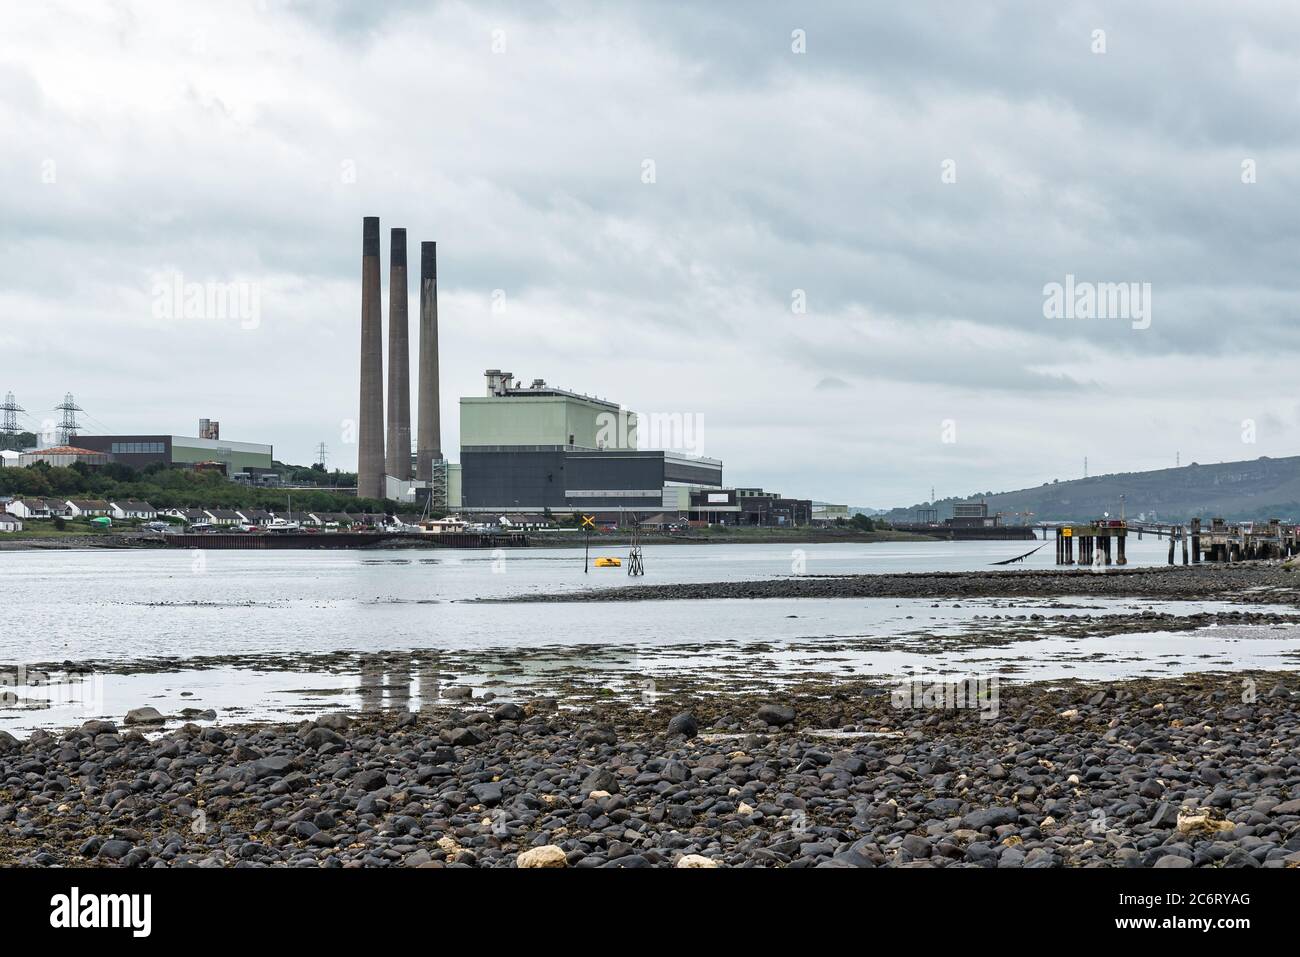 Larne, Northern Ireland- July 4, 2020: Ballylumford Power Station on the shores of Larne harbor Stock Photo